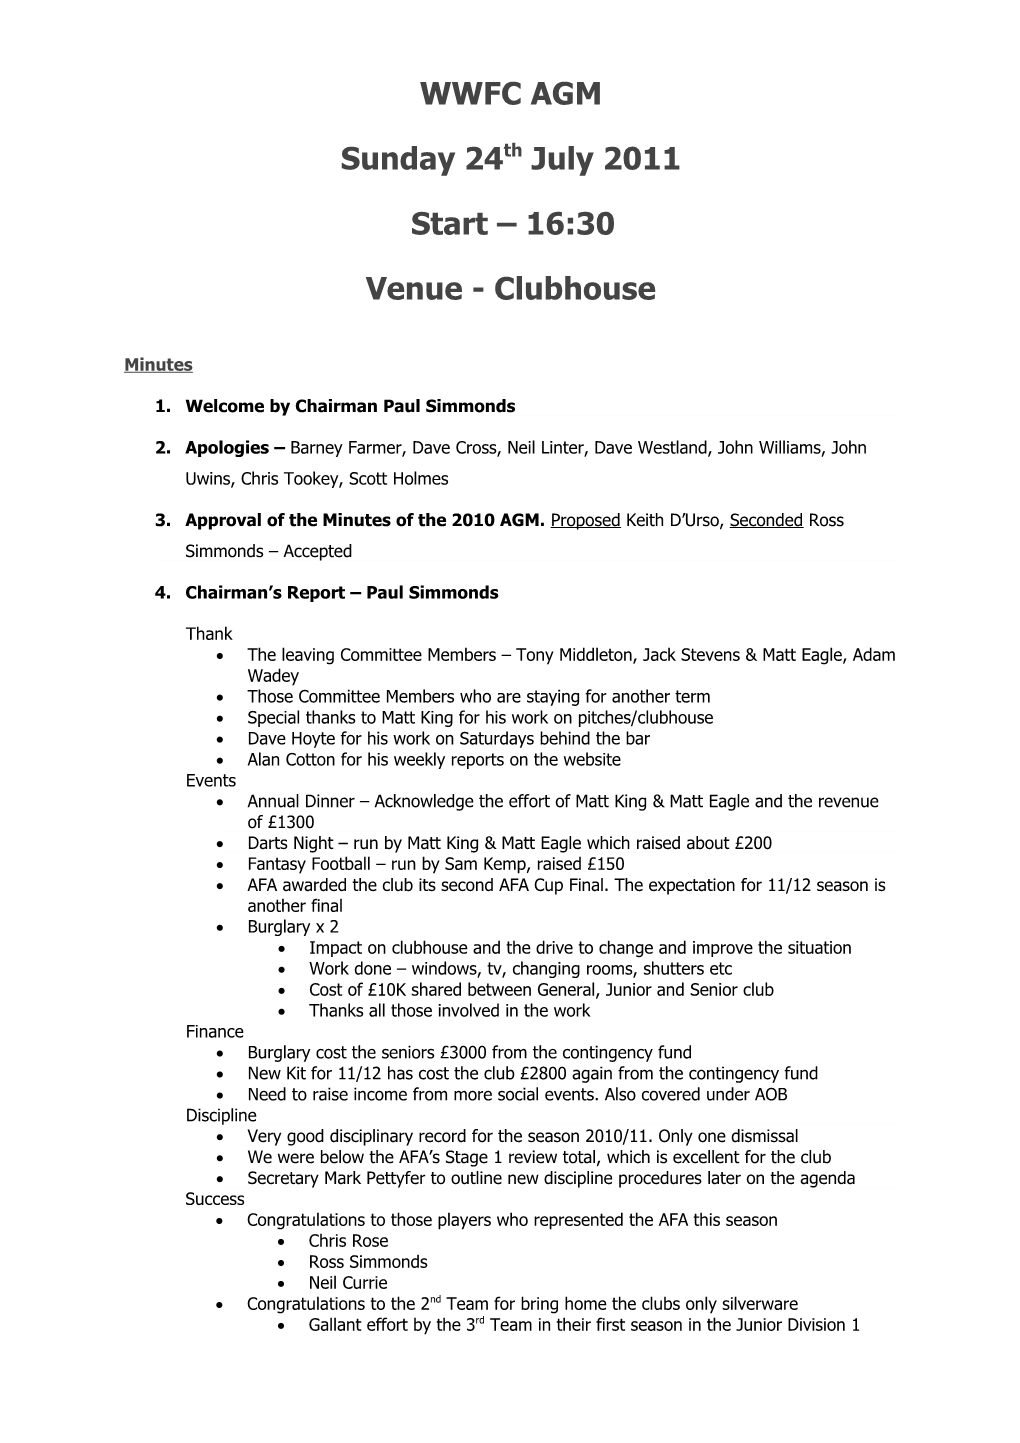 Venue - Clubhouse